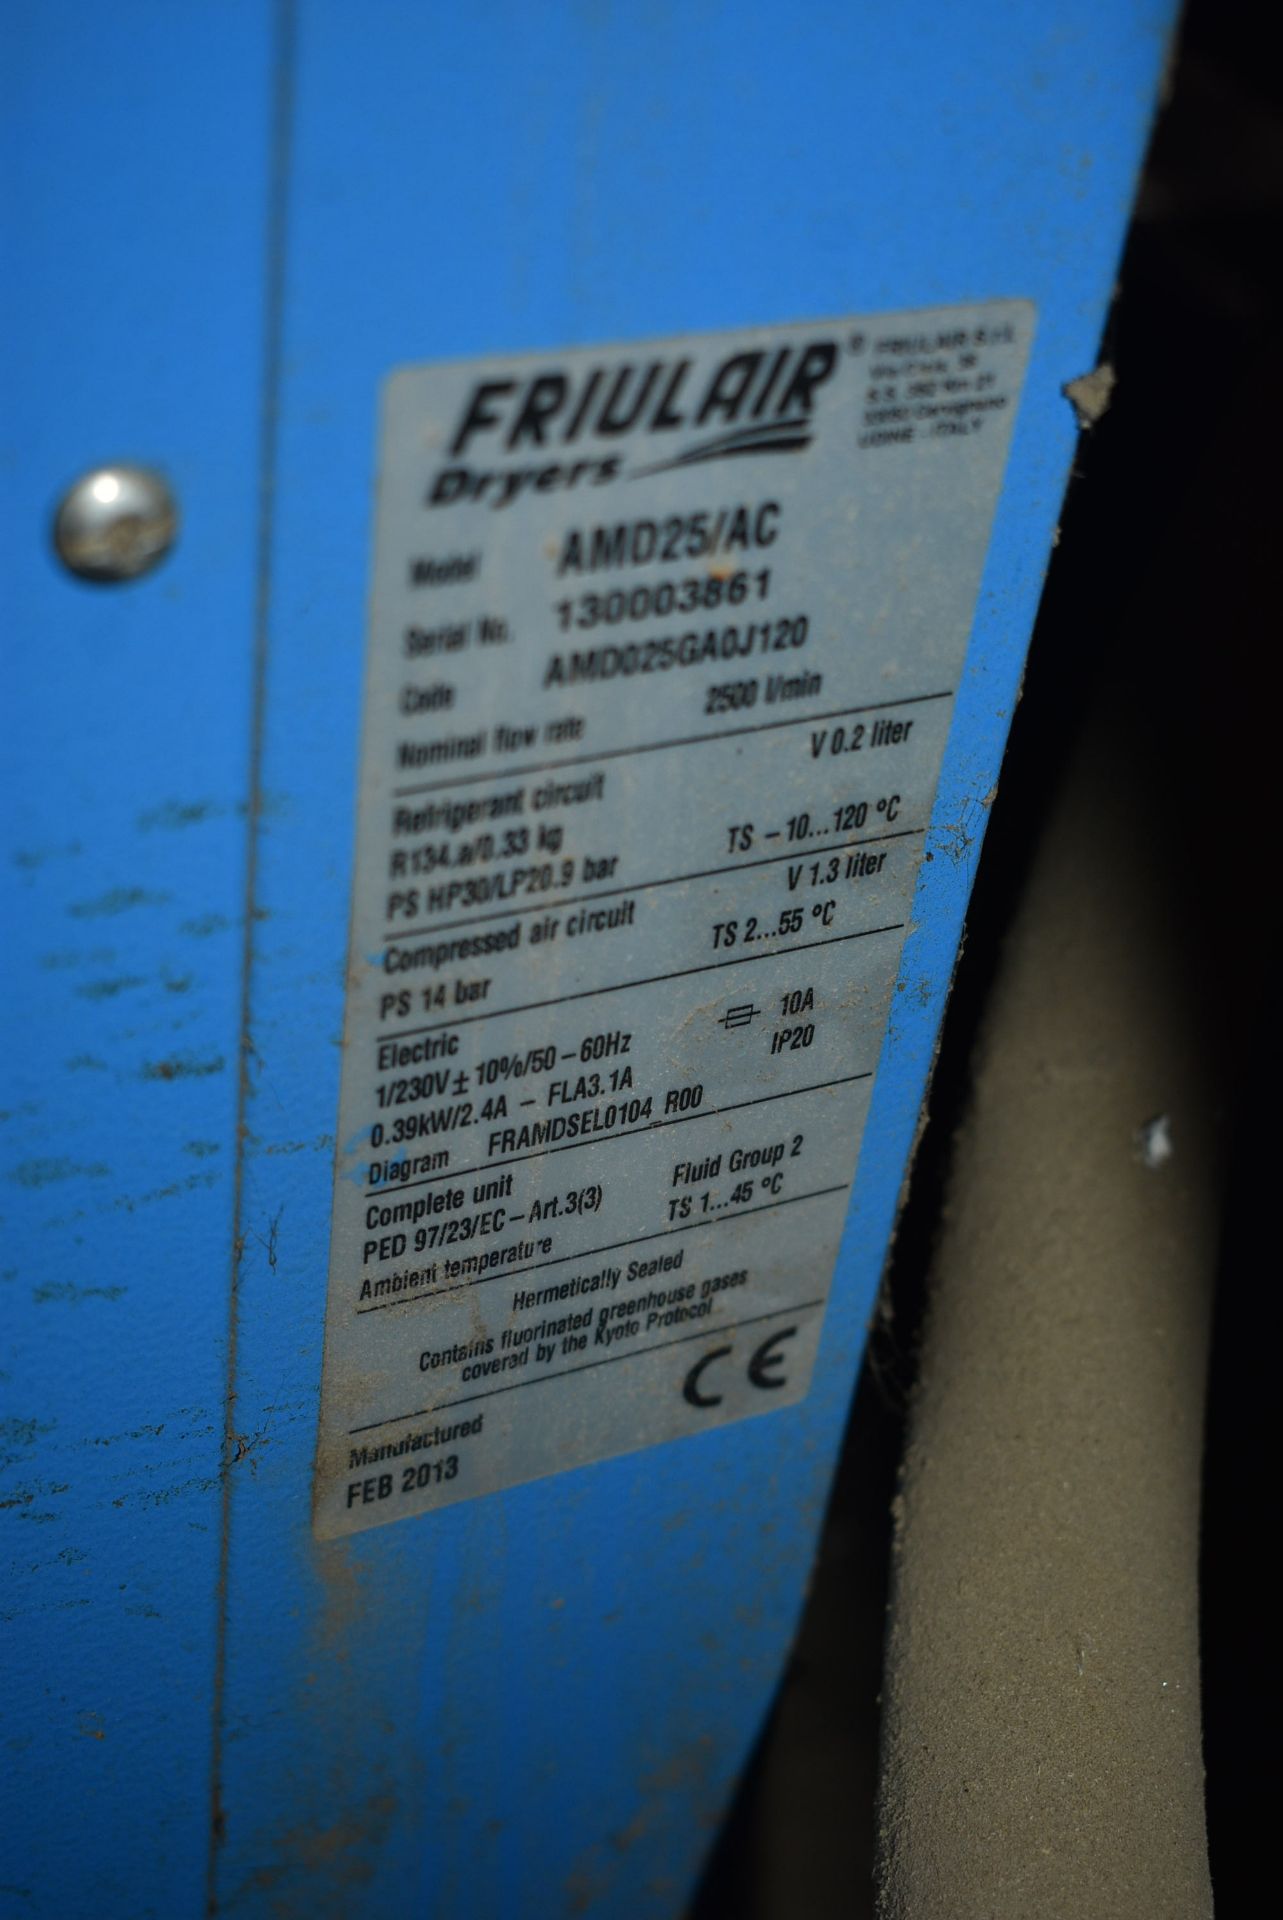 Friulair AMD25/ AC Air Dryer, serial no. 130003861 - Image 3 of 5